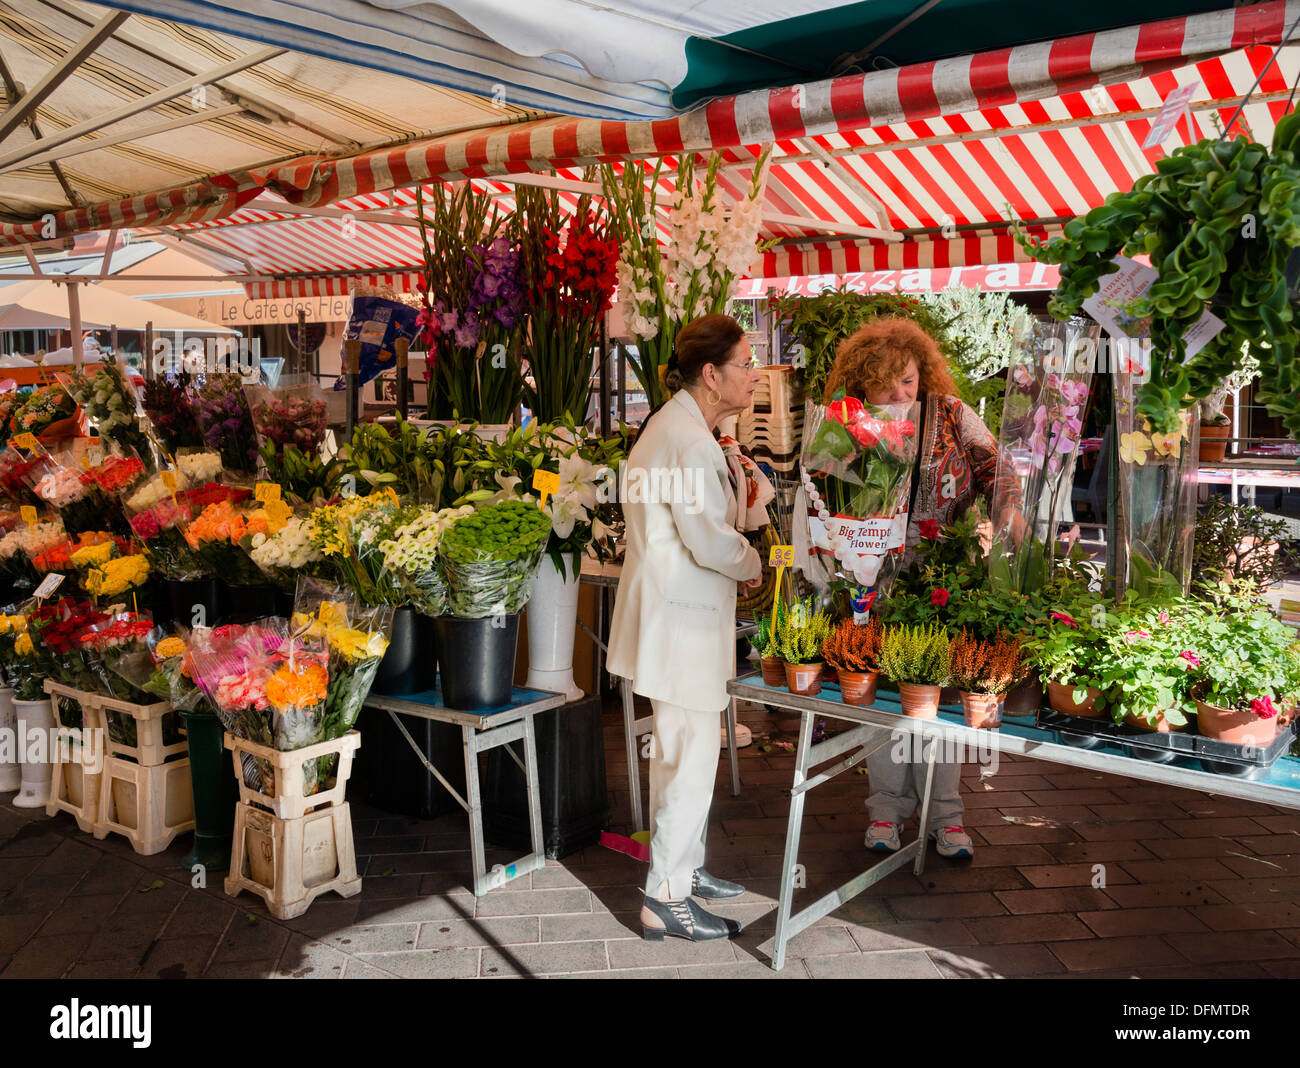 Cours Saleya flower market in Nice Stock Photo